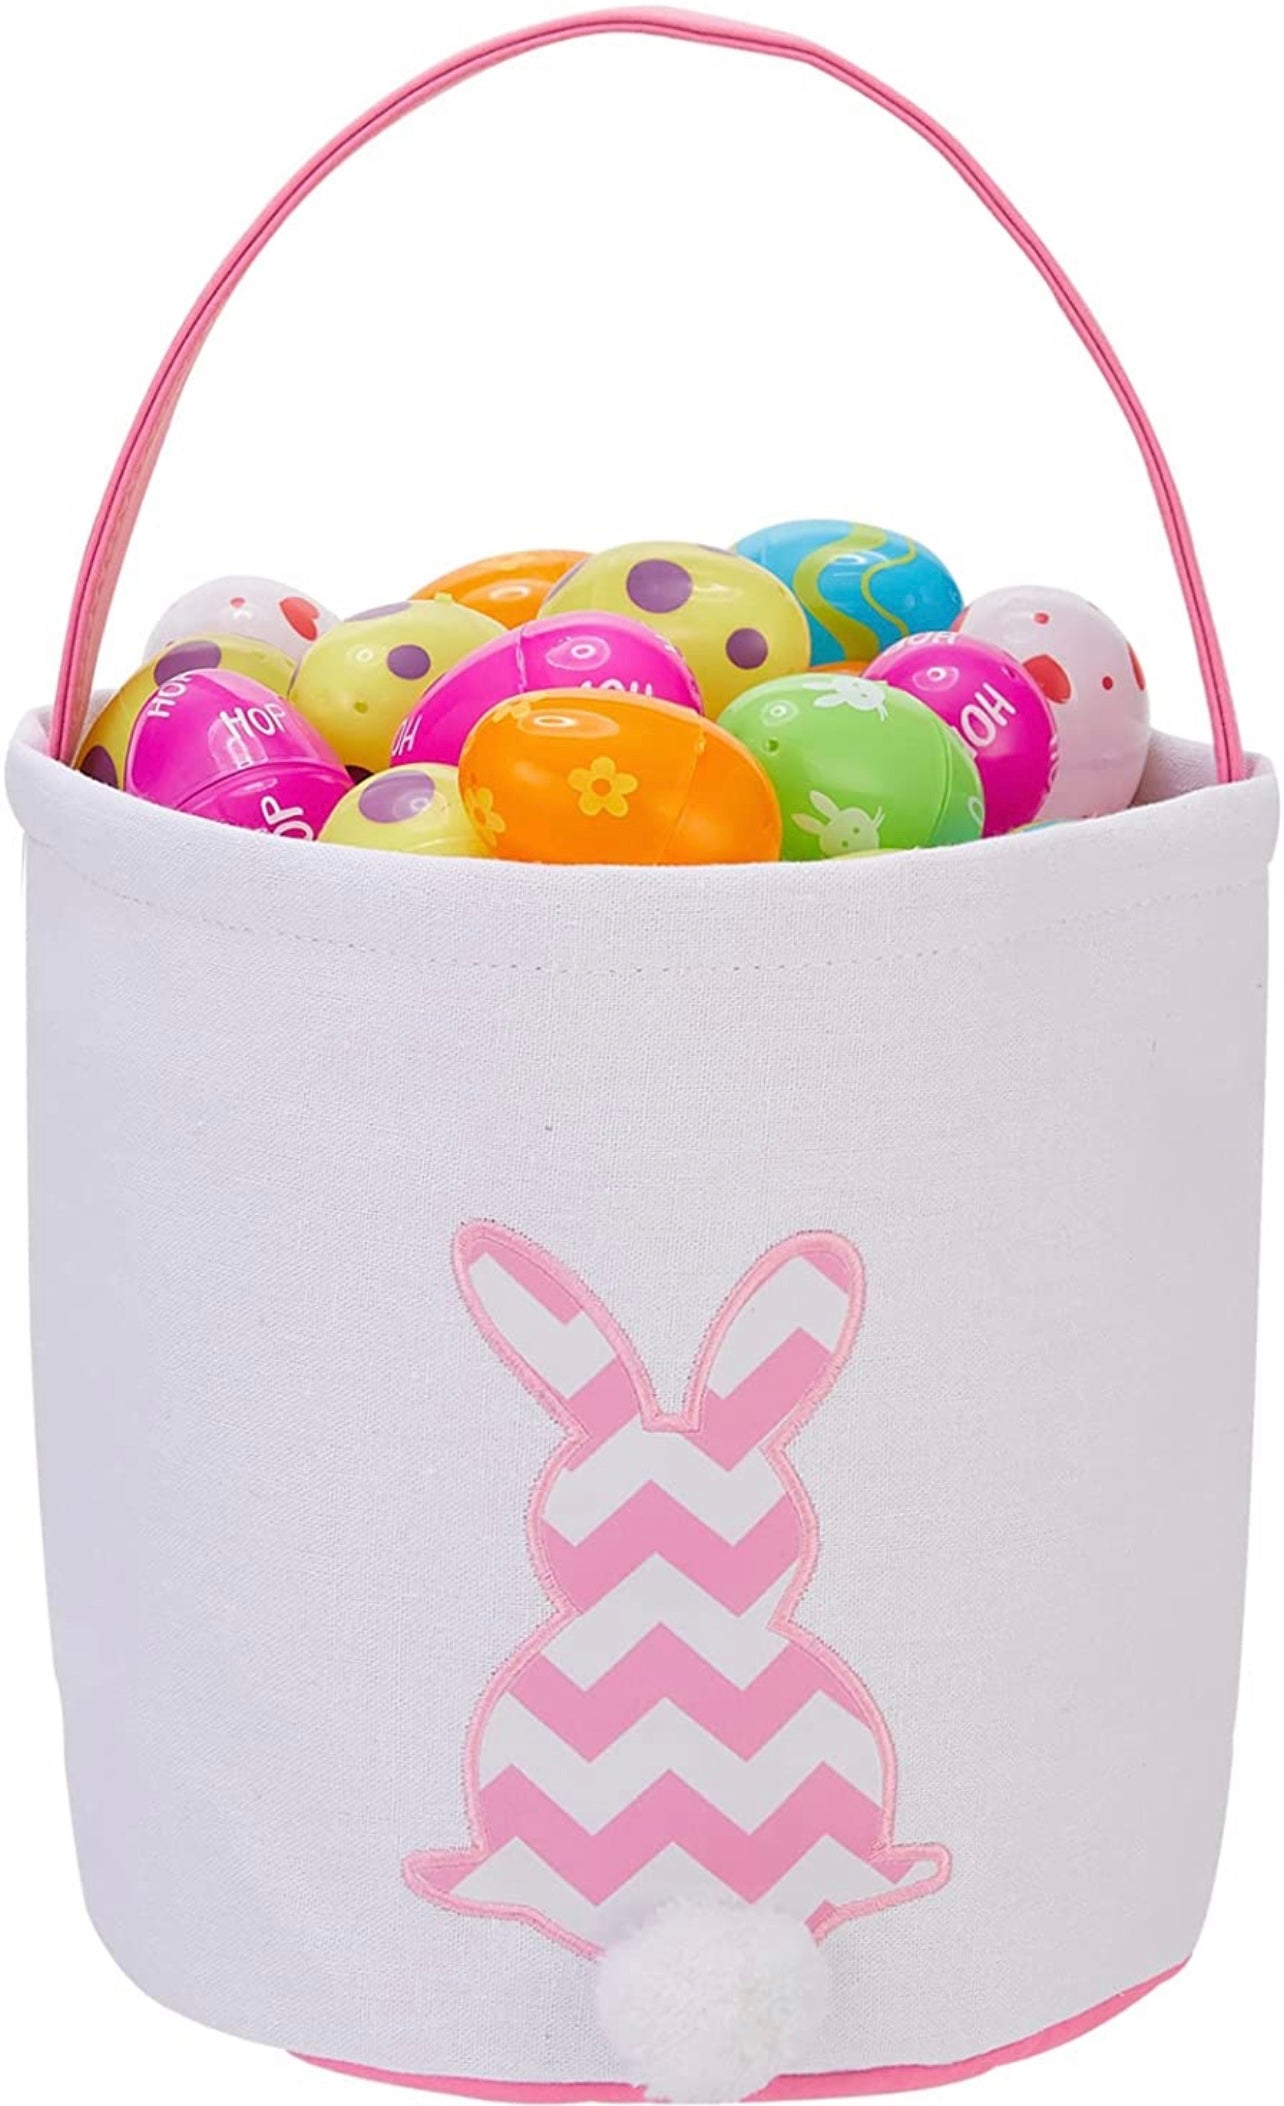 Chevron Easter Bunny Basket